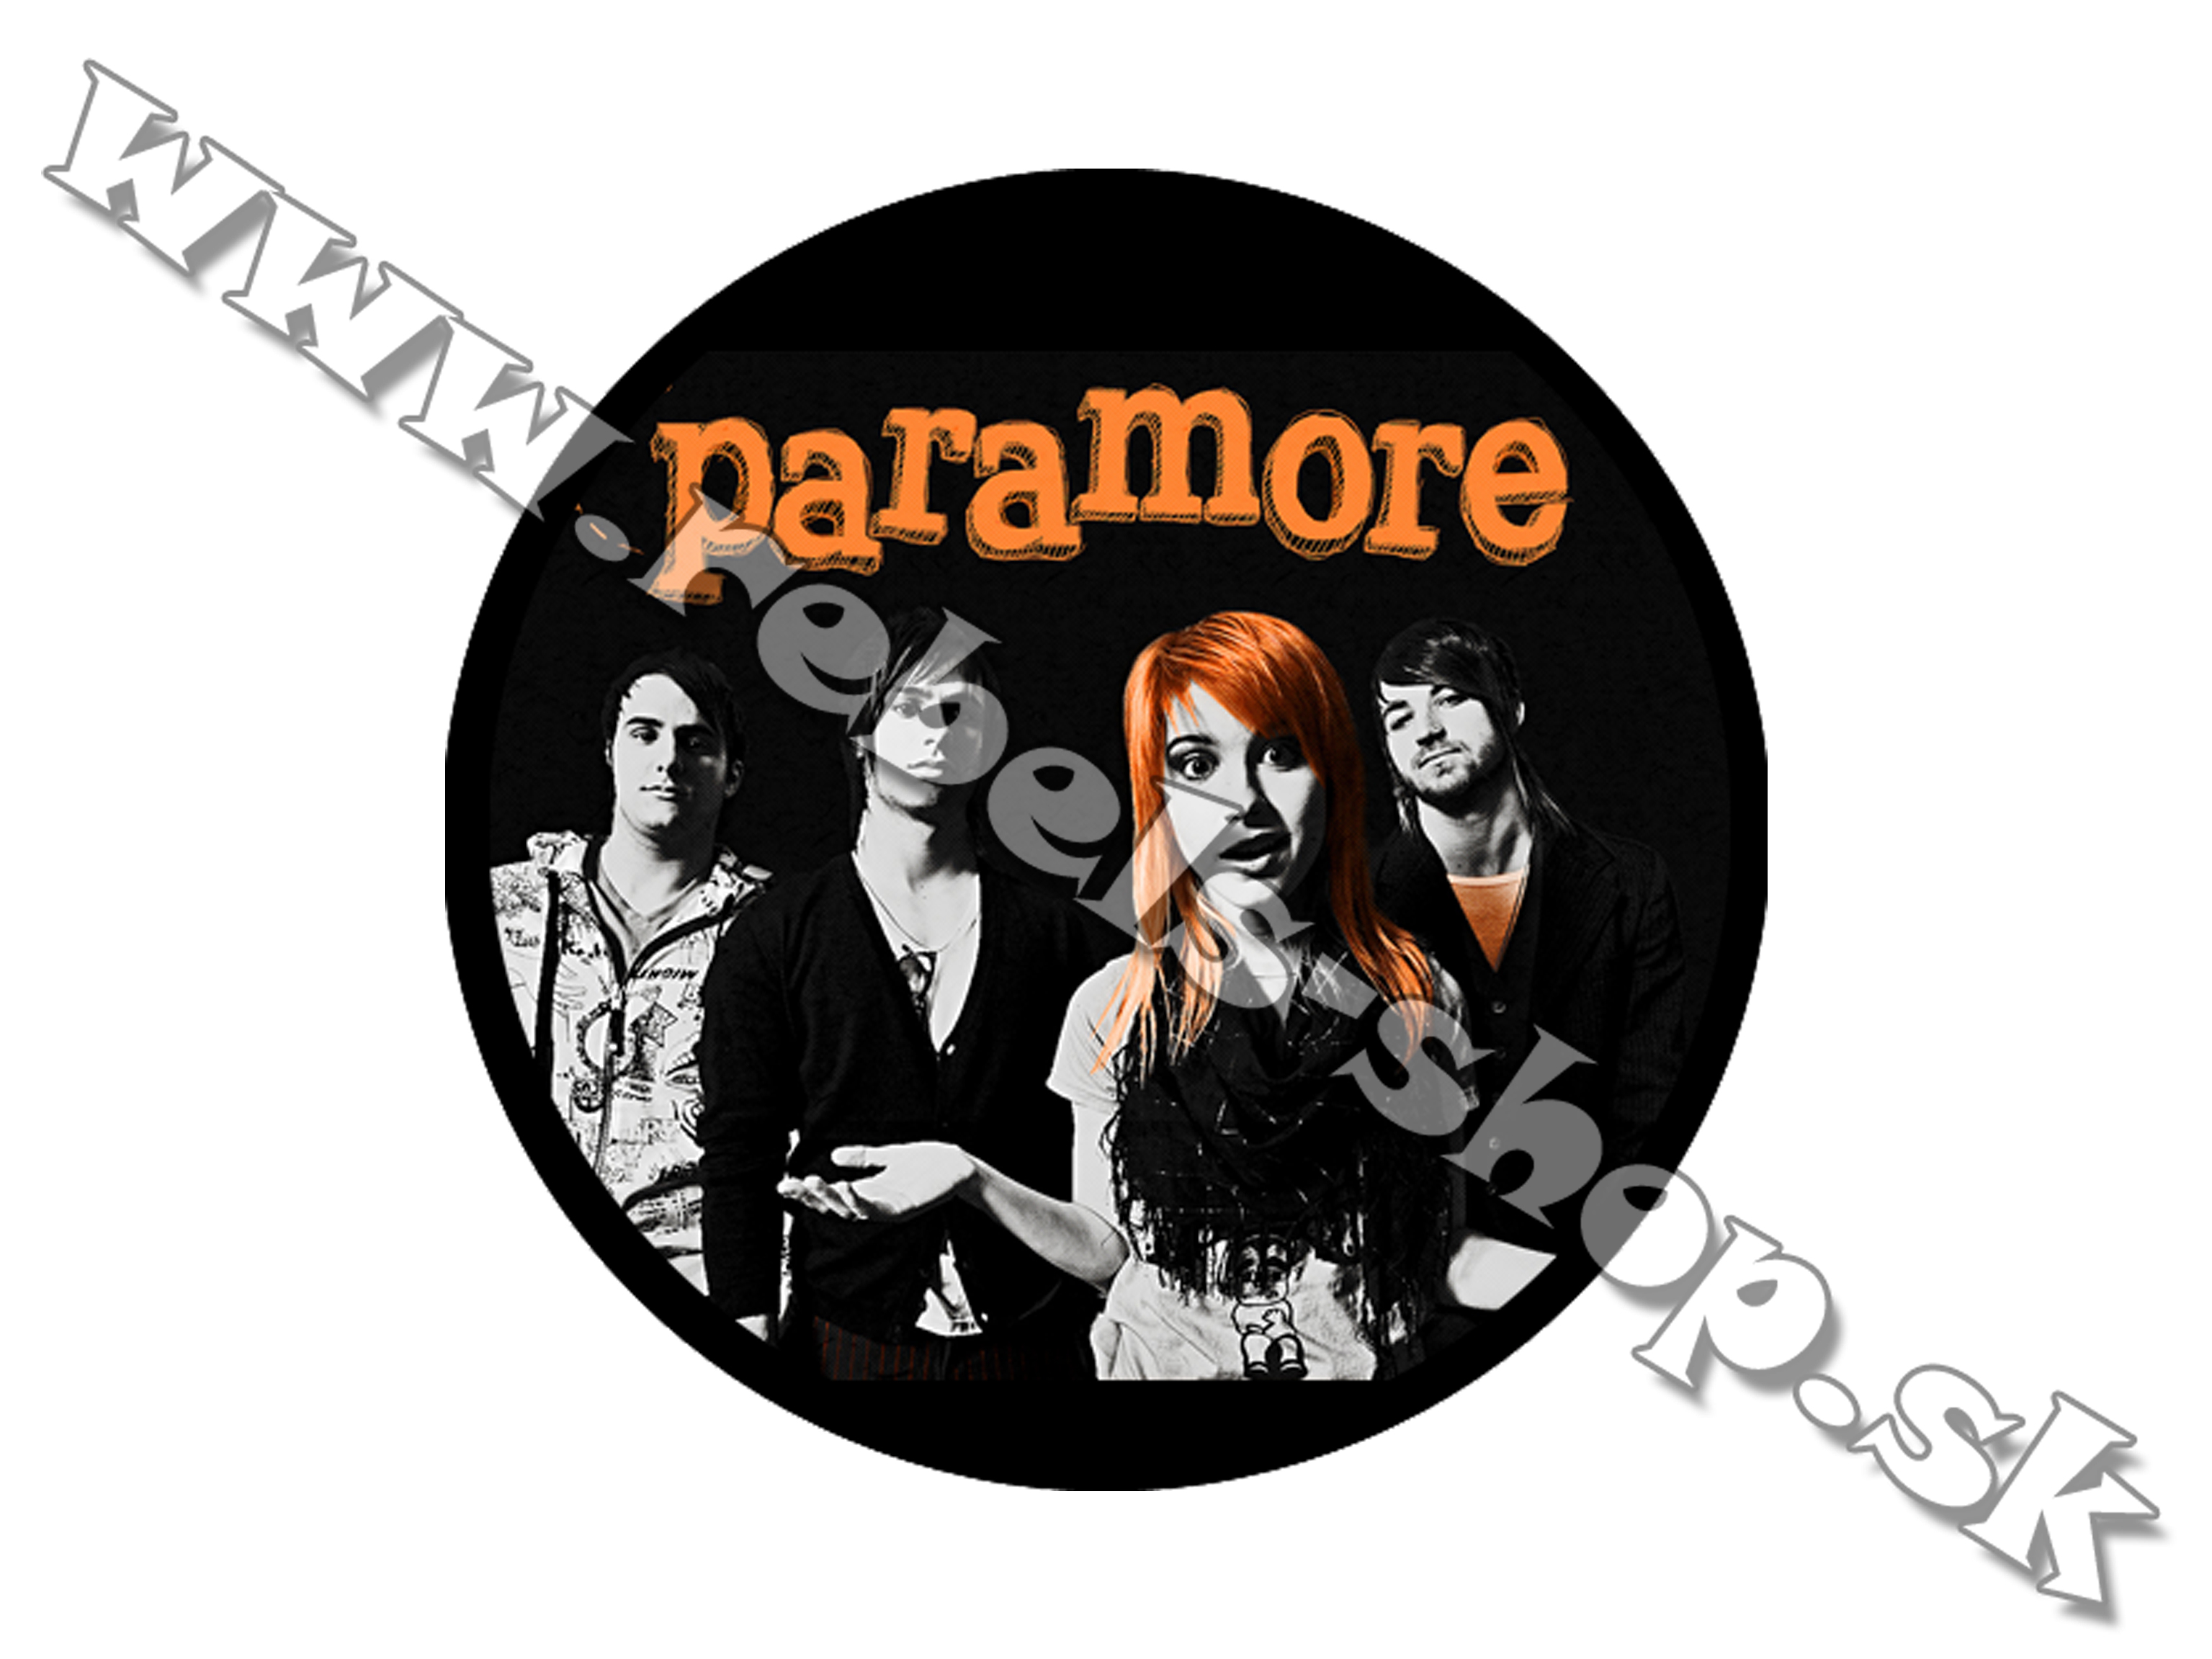 Odznak "Paramore"